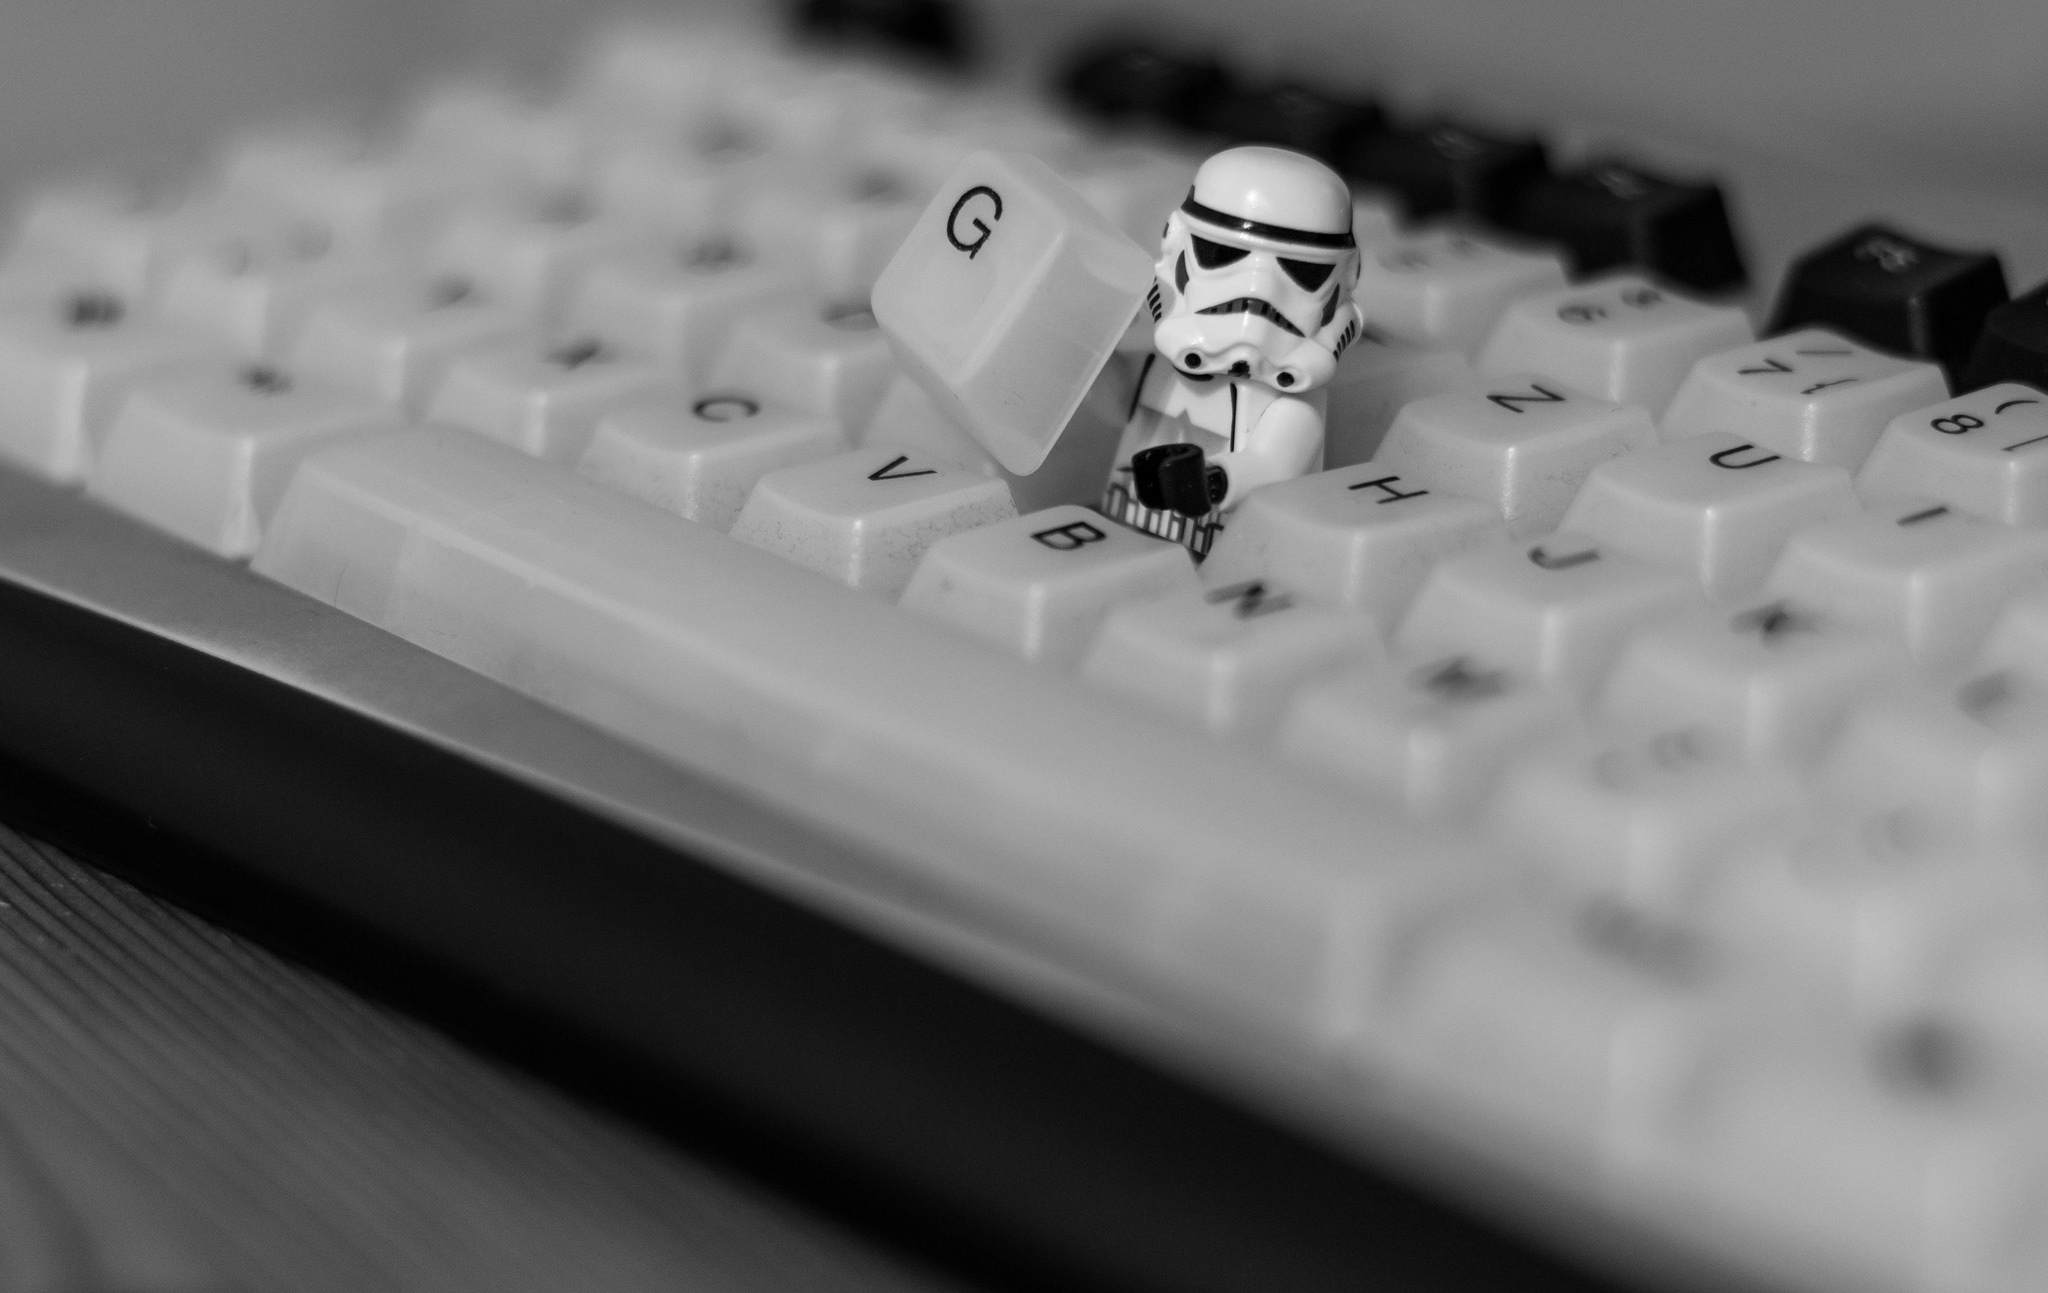 Lego Black Amp White Keyboard Stormtrooper Star Wars 2048x1293